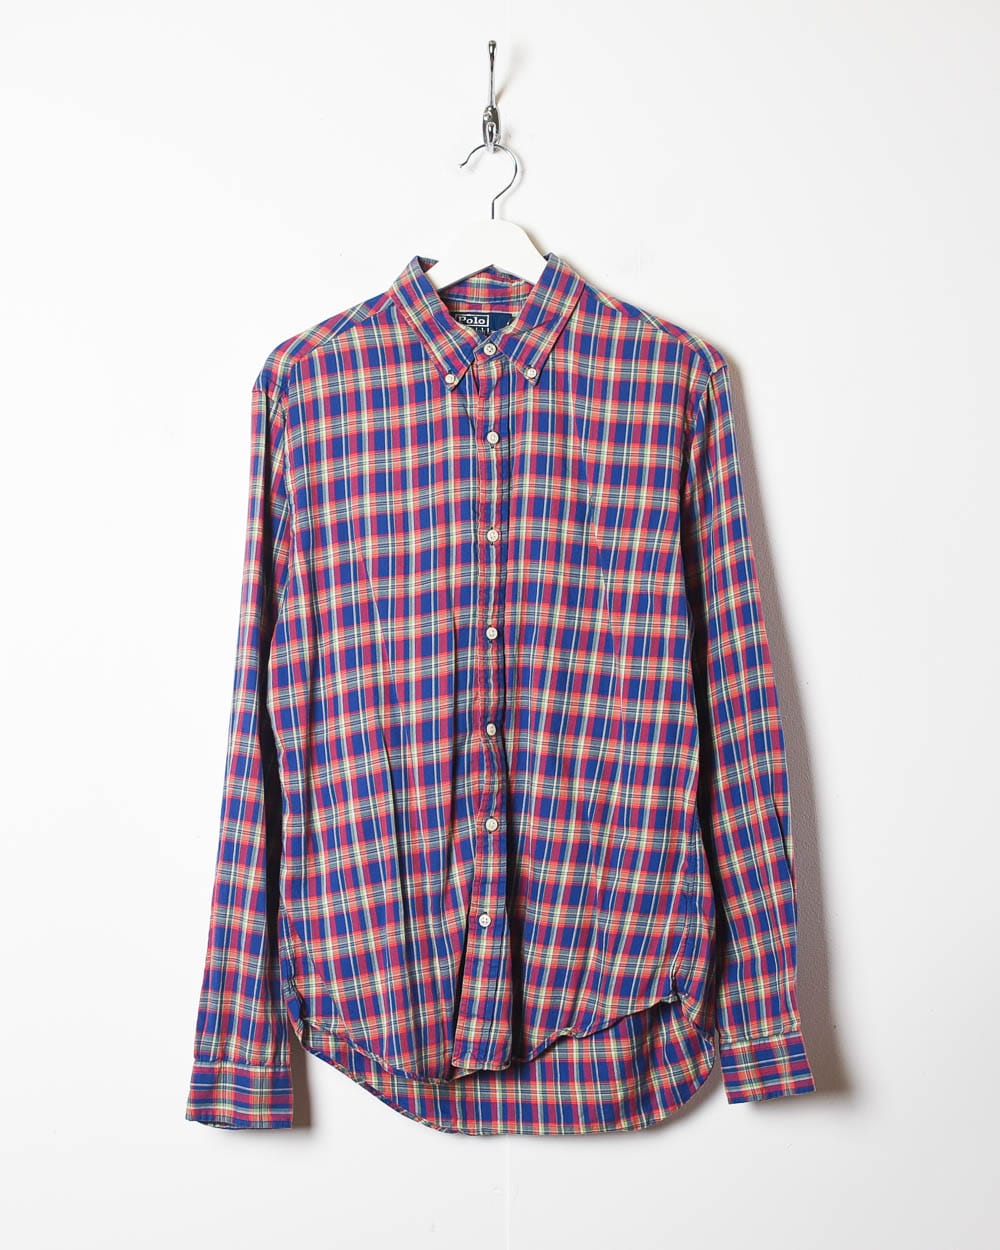 Multi Polo Ralph Lauren Checked Shirt - Medium